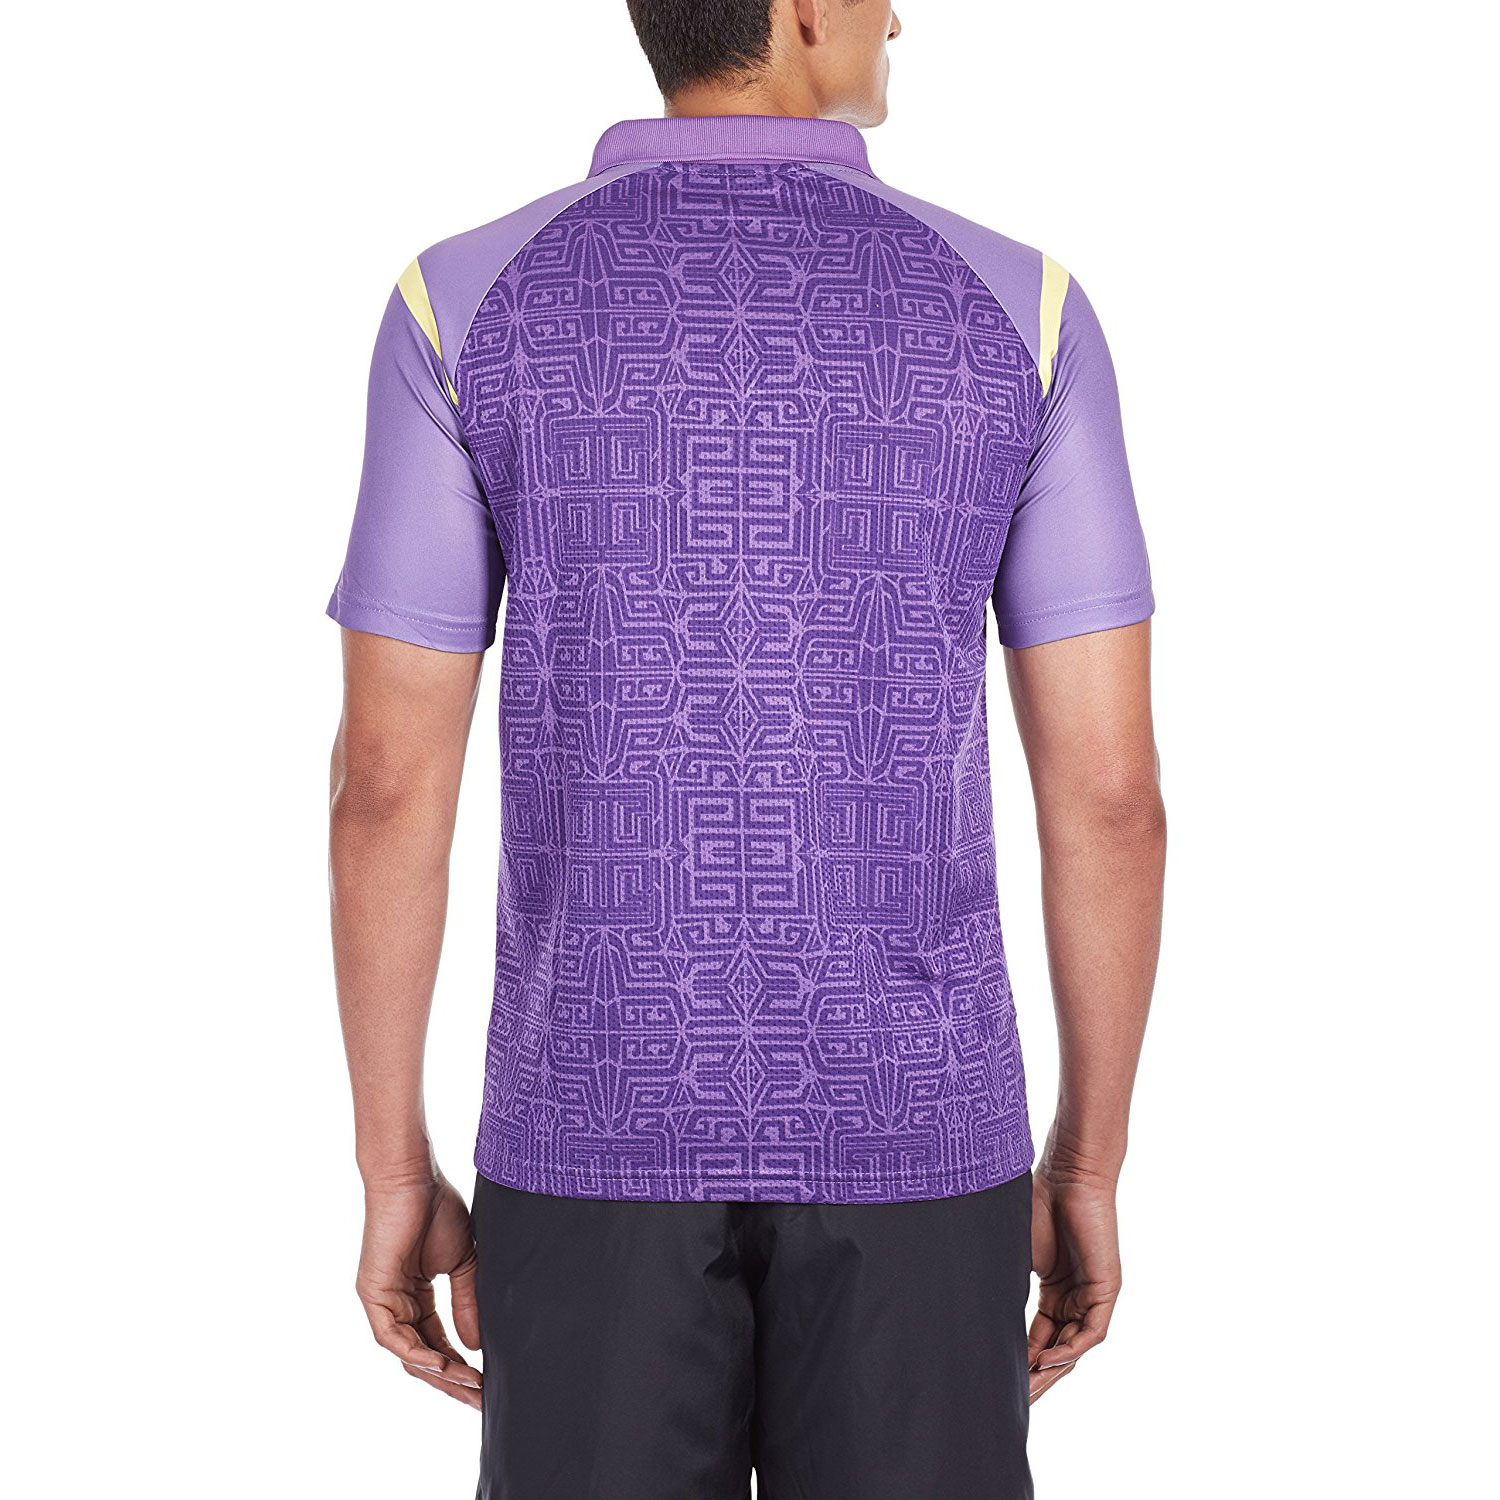 Li-Ning ALPH421-5 Collar Badminton T-Shirt, Men's (Purple) 